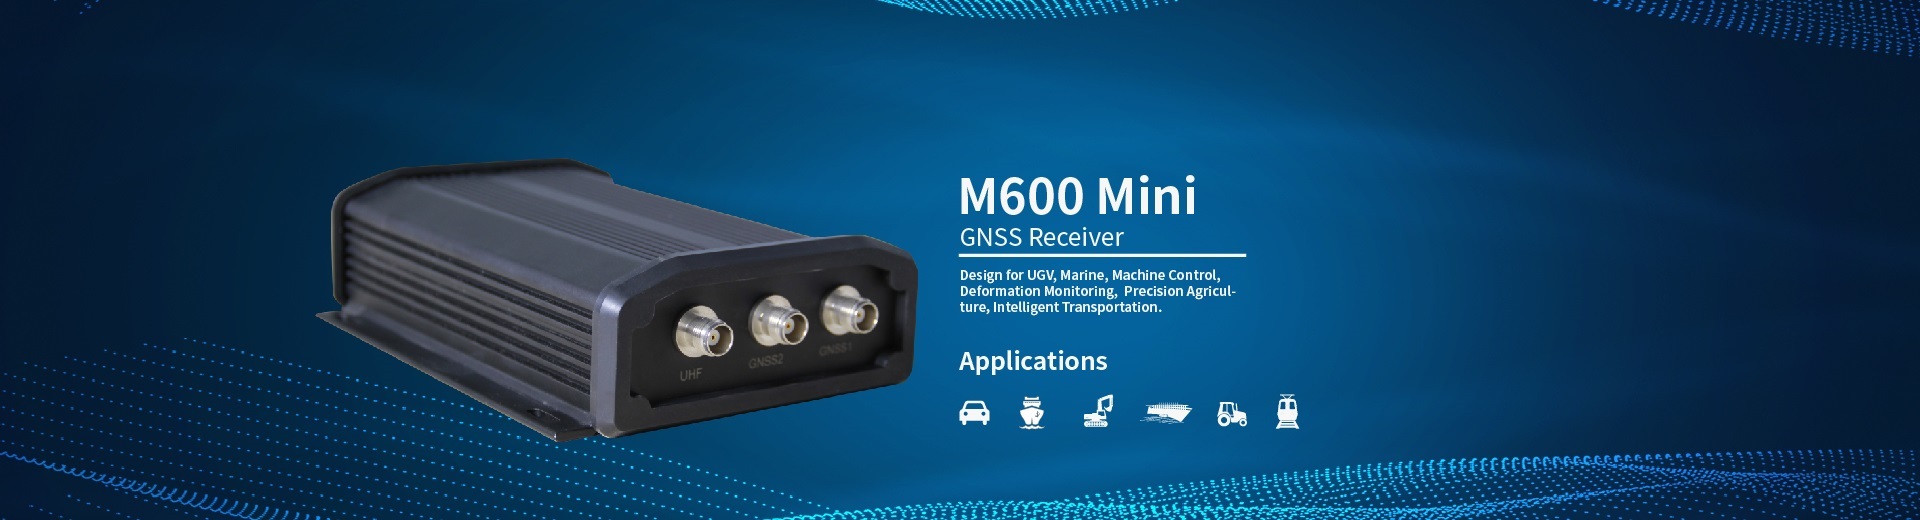 M600 Mini GNSS Receiver